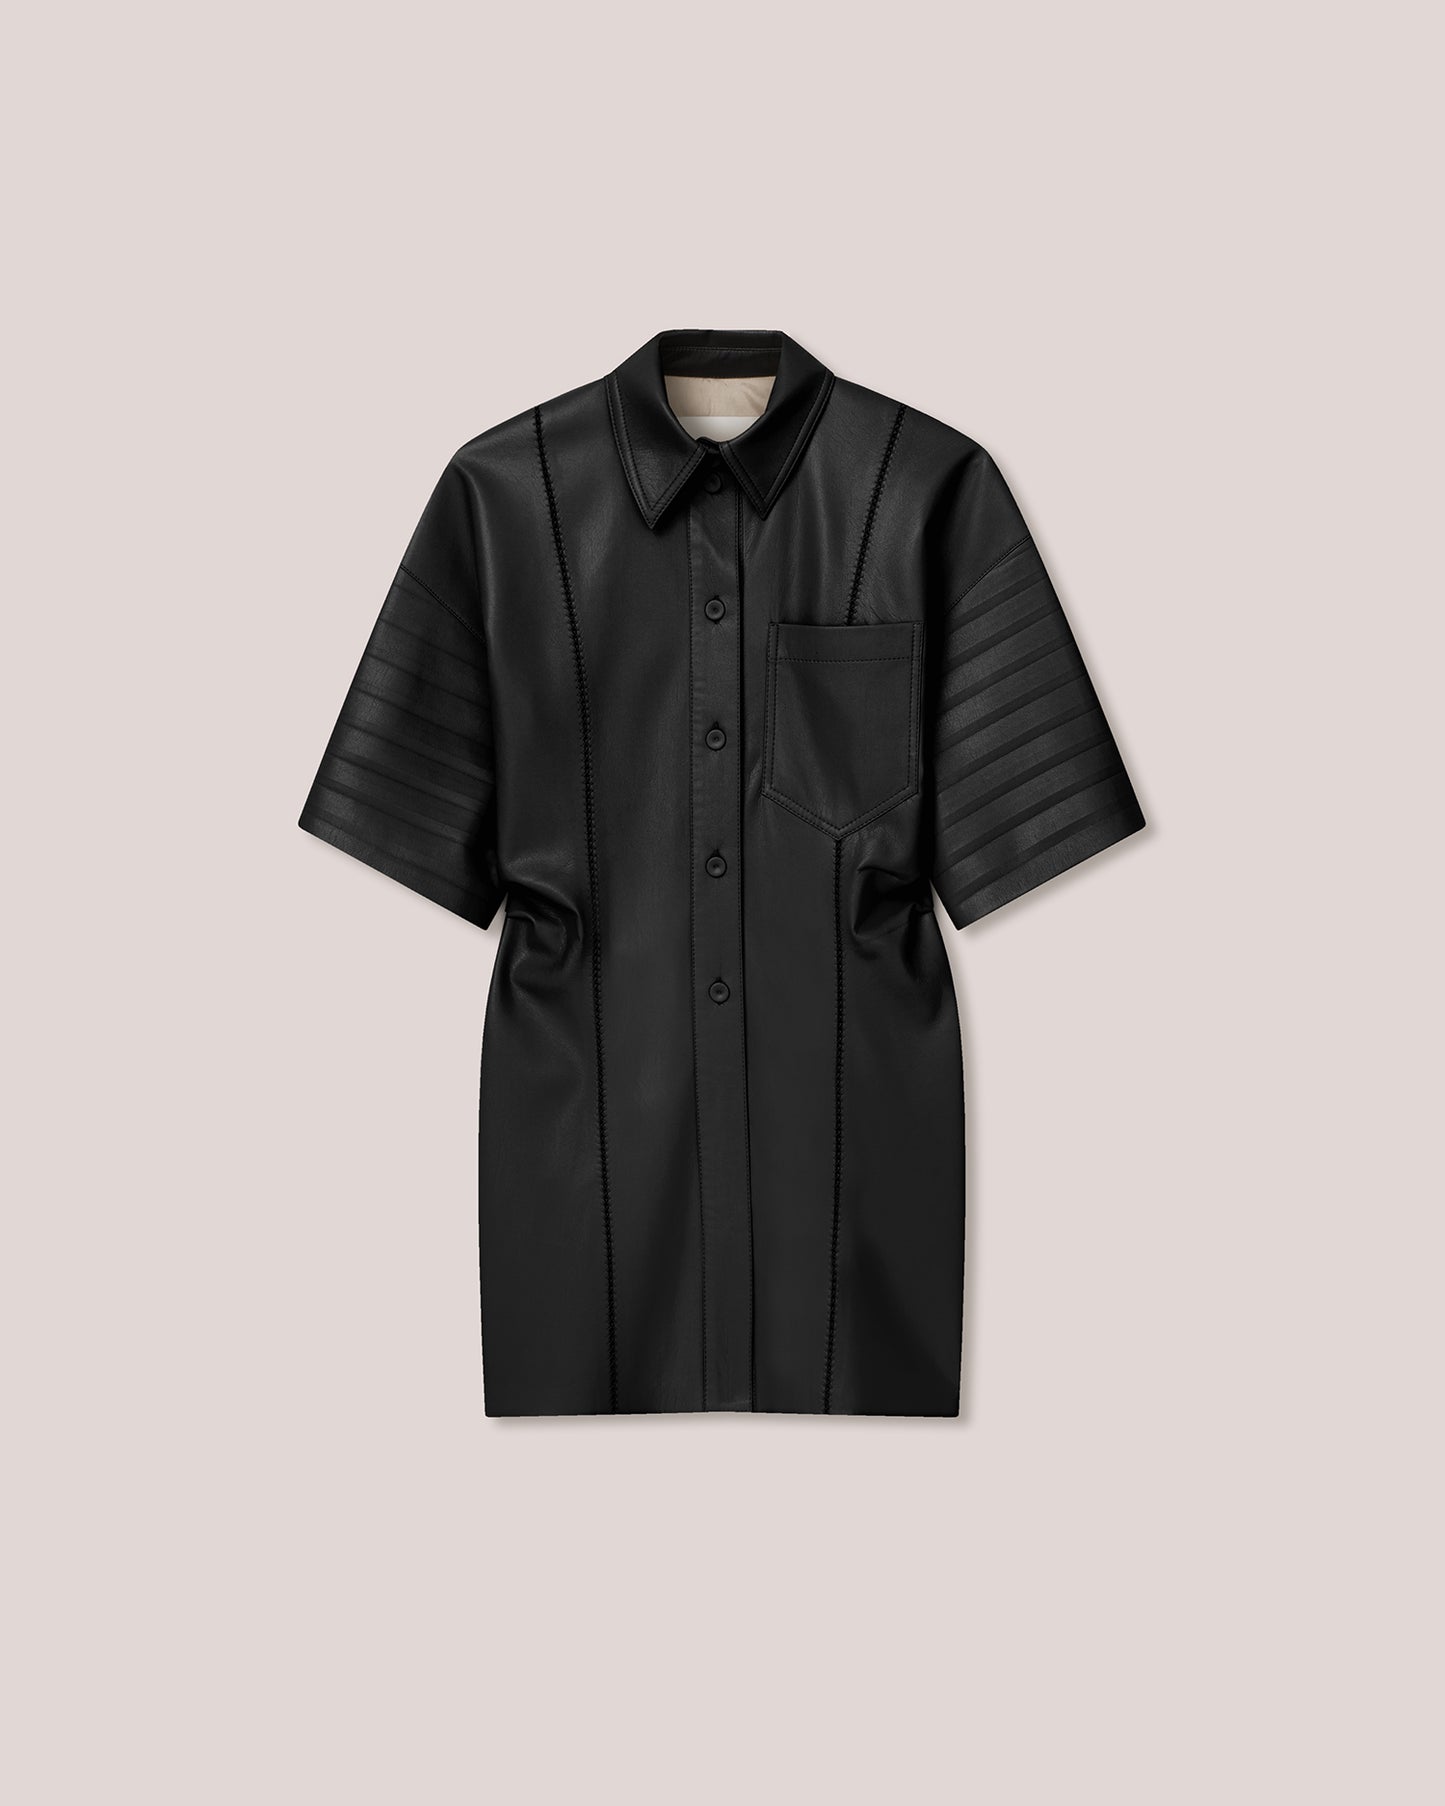 Taya - Archive Vegan Leather Corrugated Effect Short Sleeve Shirt - Black